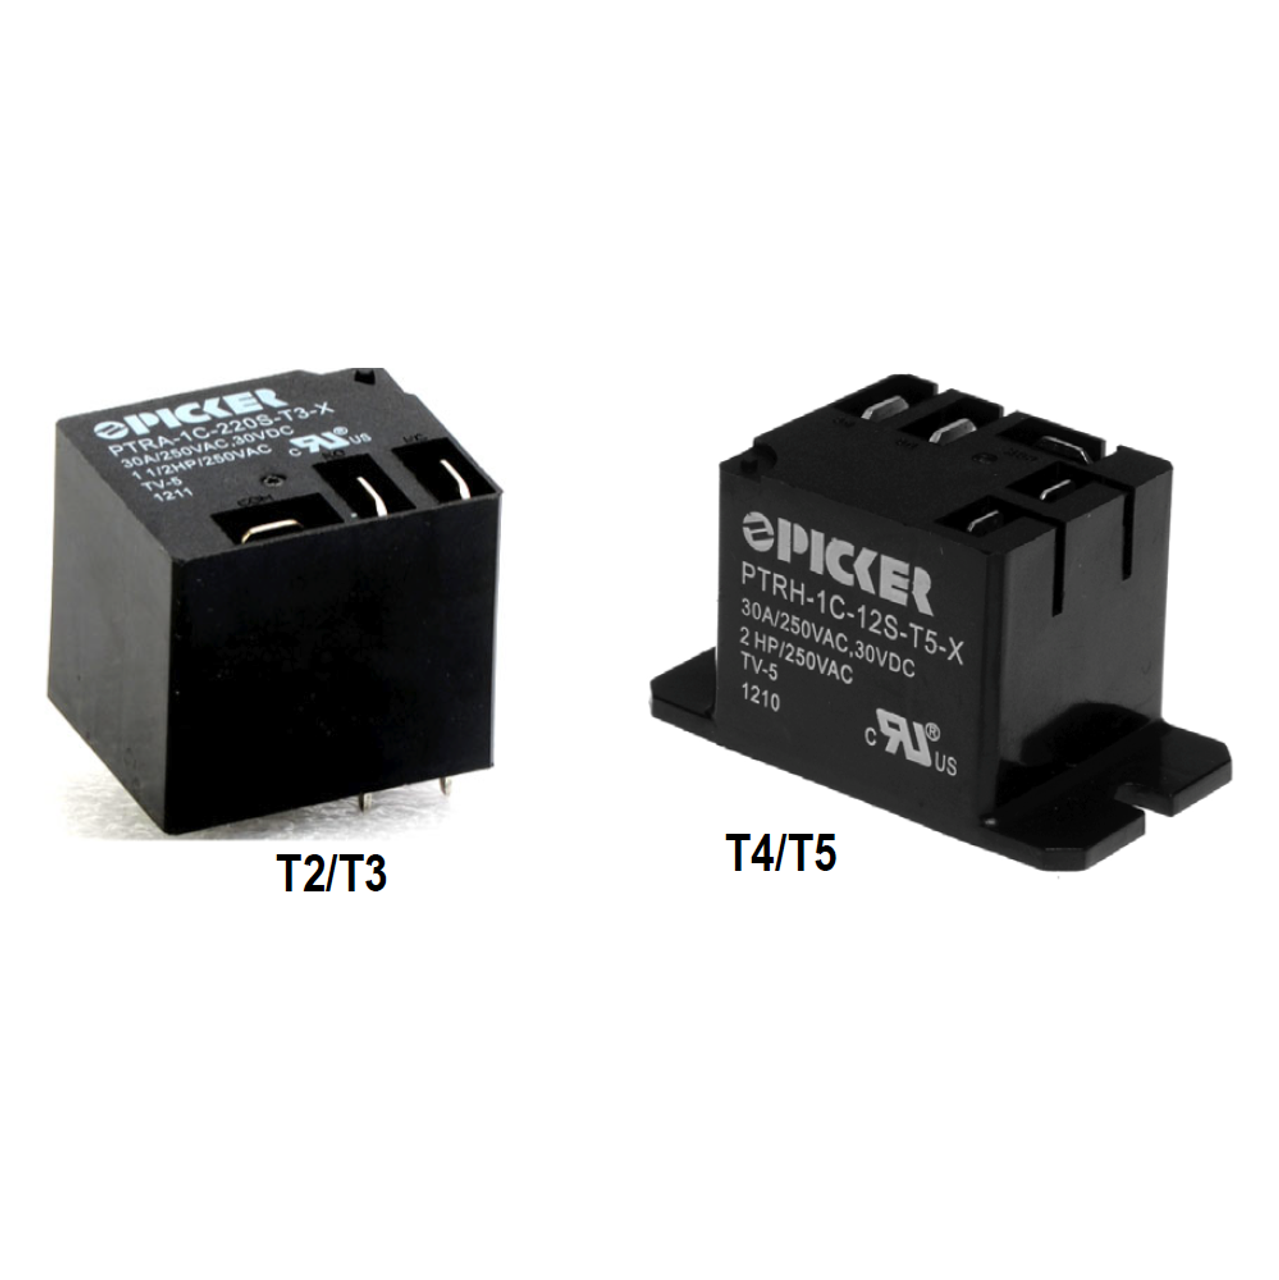 Picker PTRH-1C-110SF-T2-X67A Power Relays